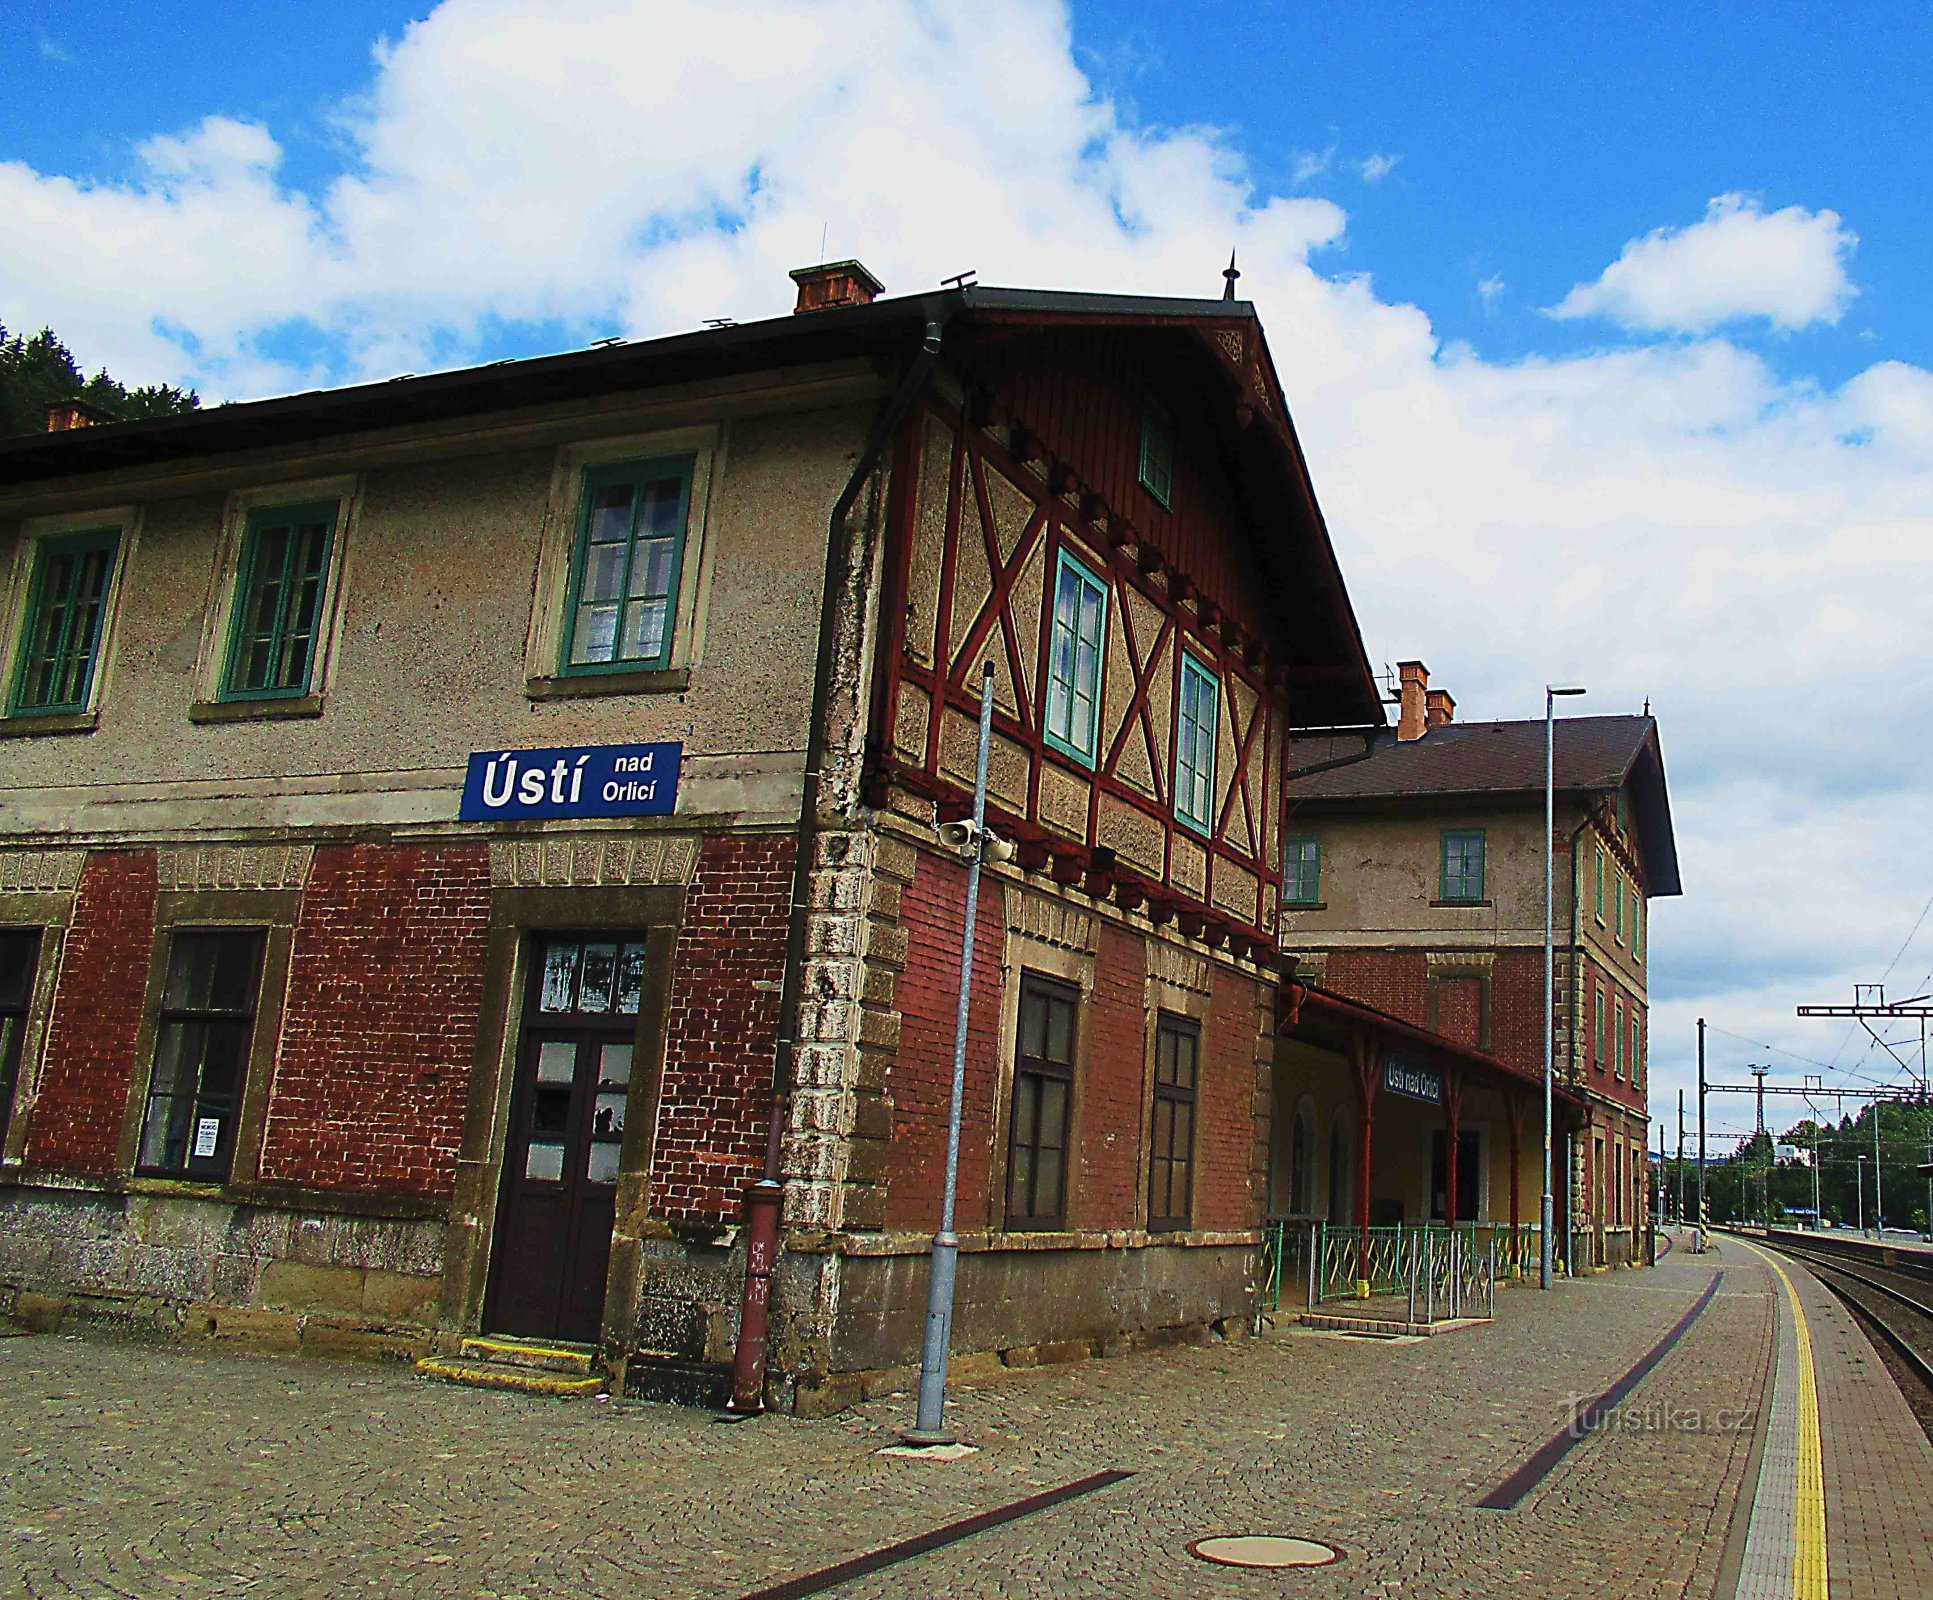 Historisk bygning af jernbanestationen i Ústí nad Orlicí